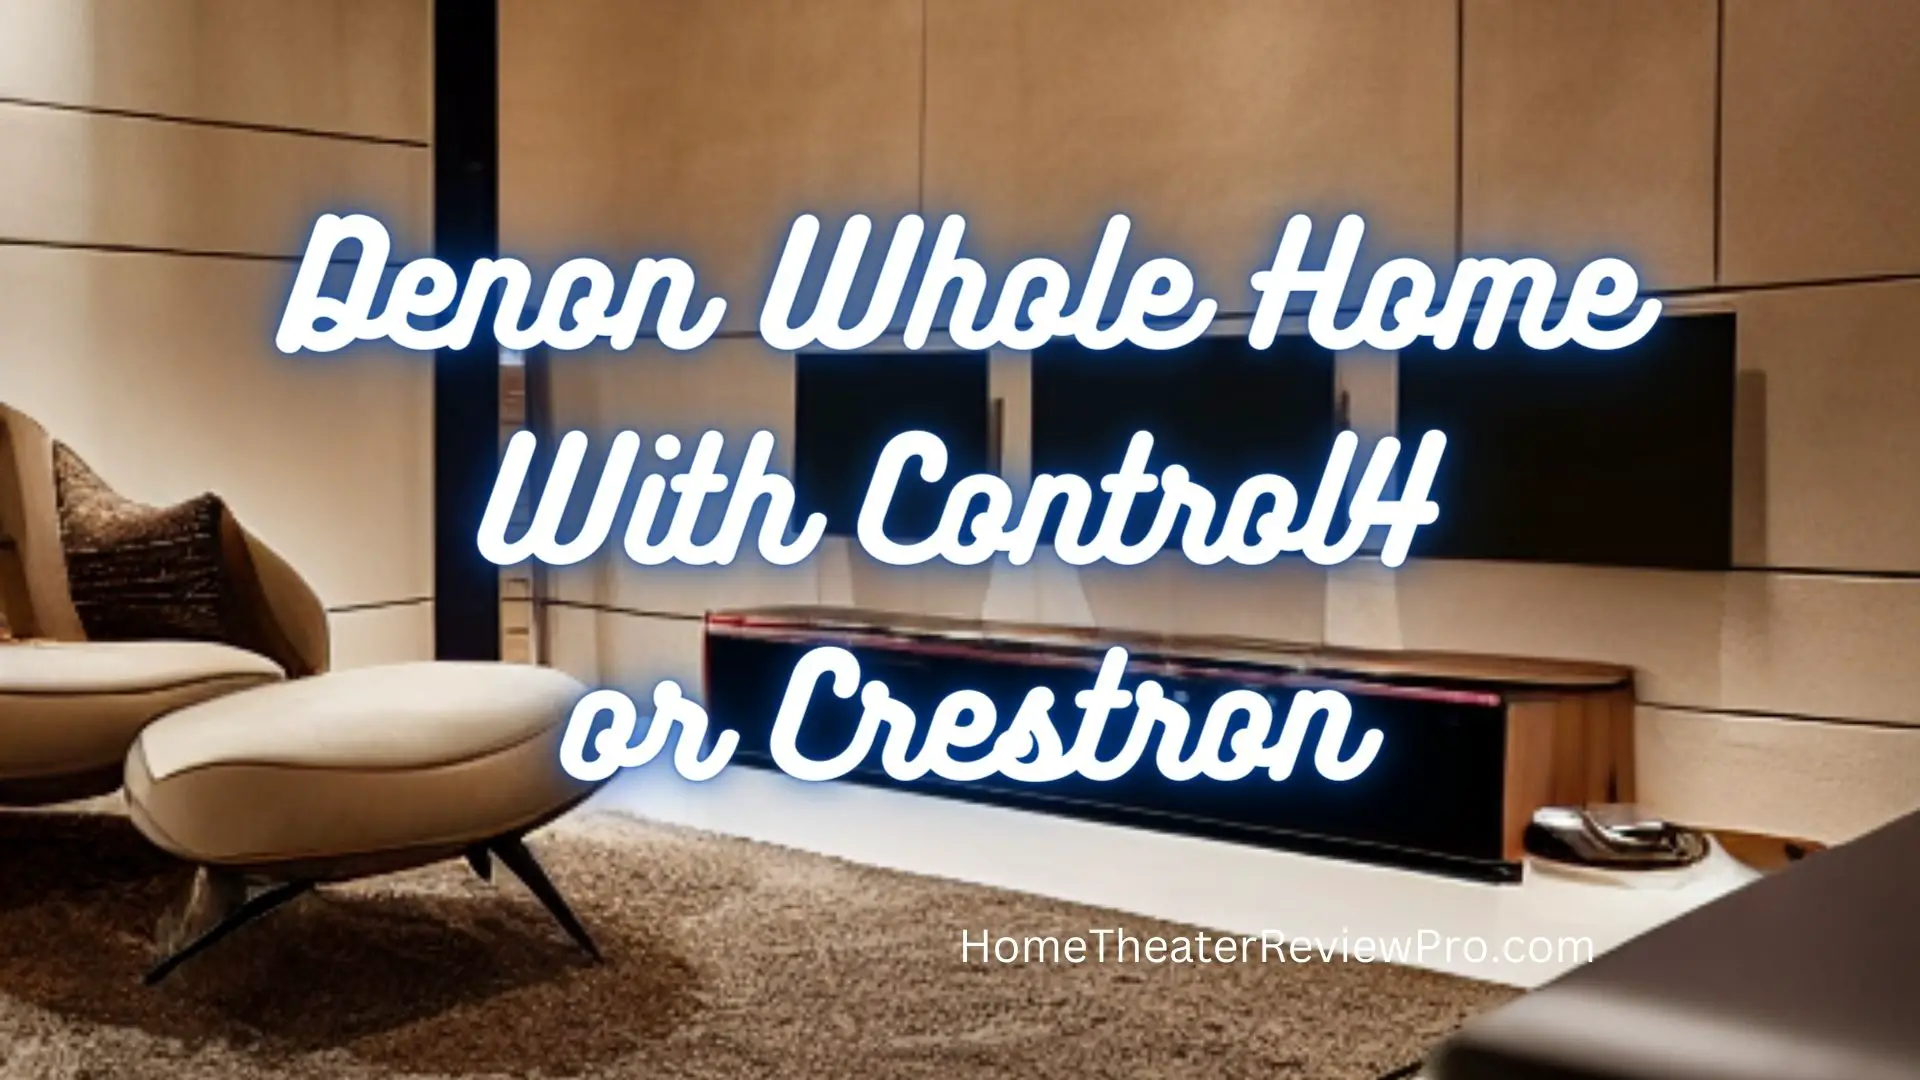 Denon Whole Home With Control4 or Crestron